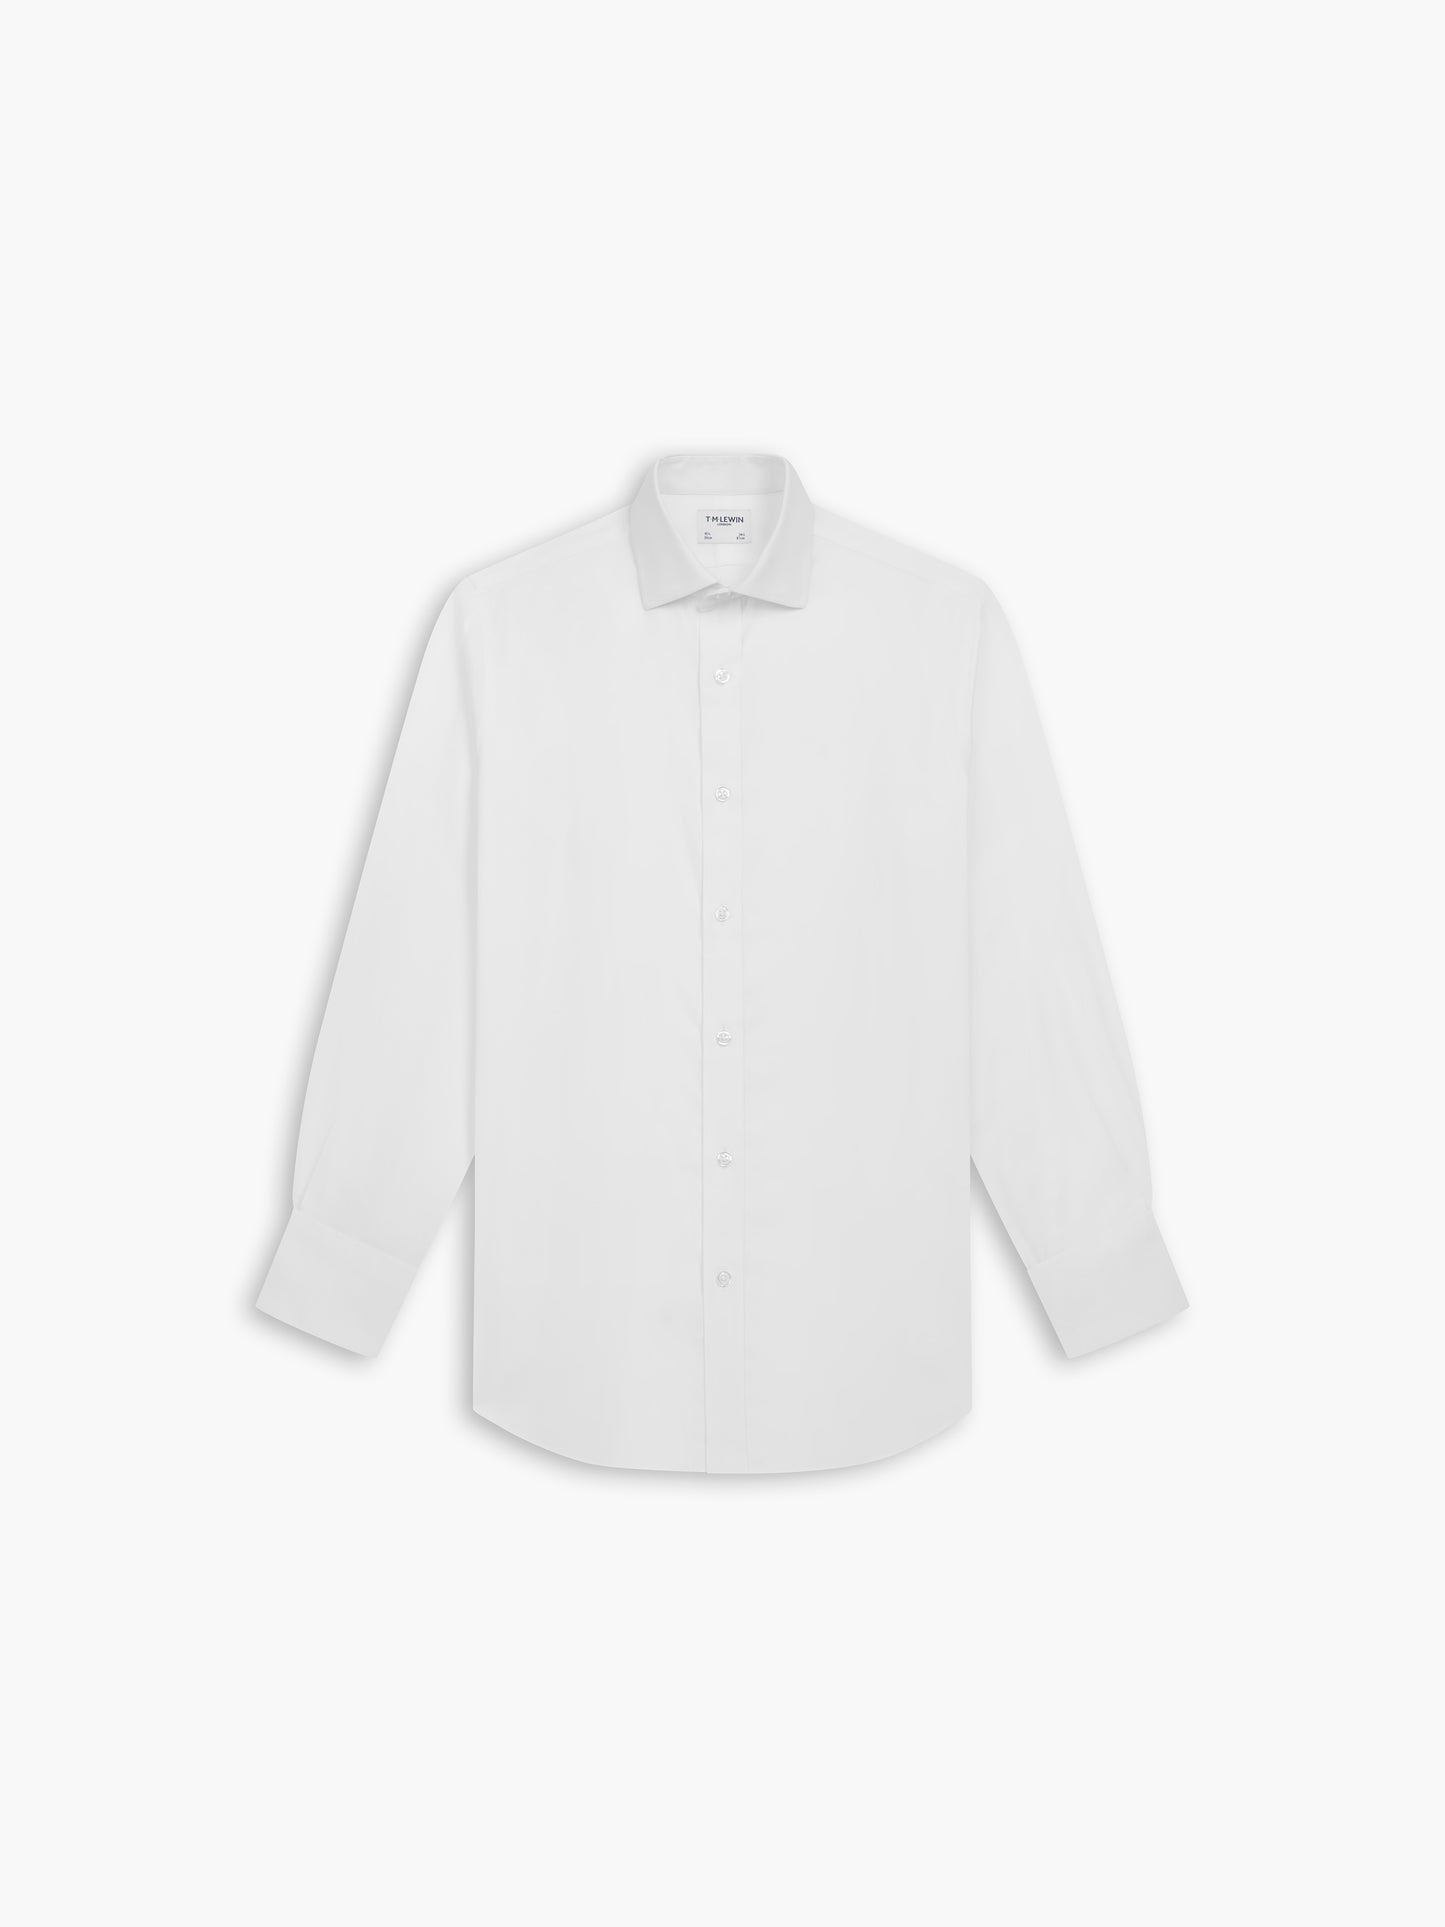 Non-Iron White Oxford Regular Fit Double Cuff Classic Collar Shirt